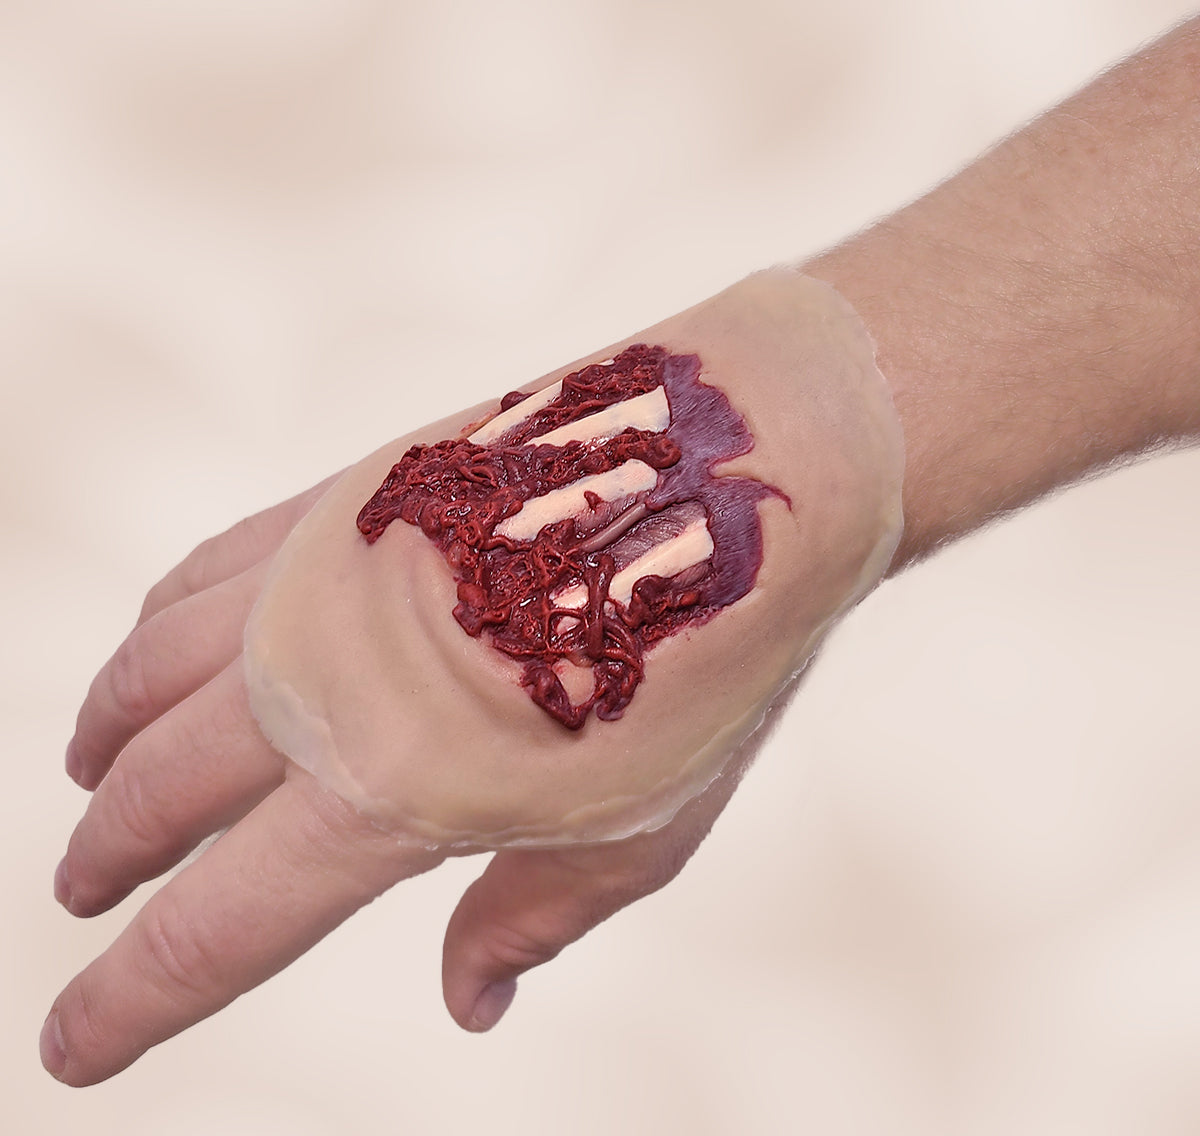 Degloved Hand Injury - Self Adhesive SW015